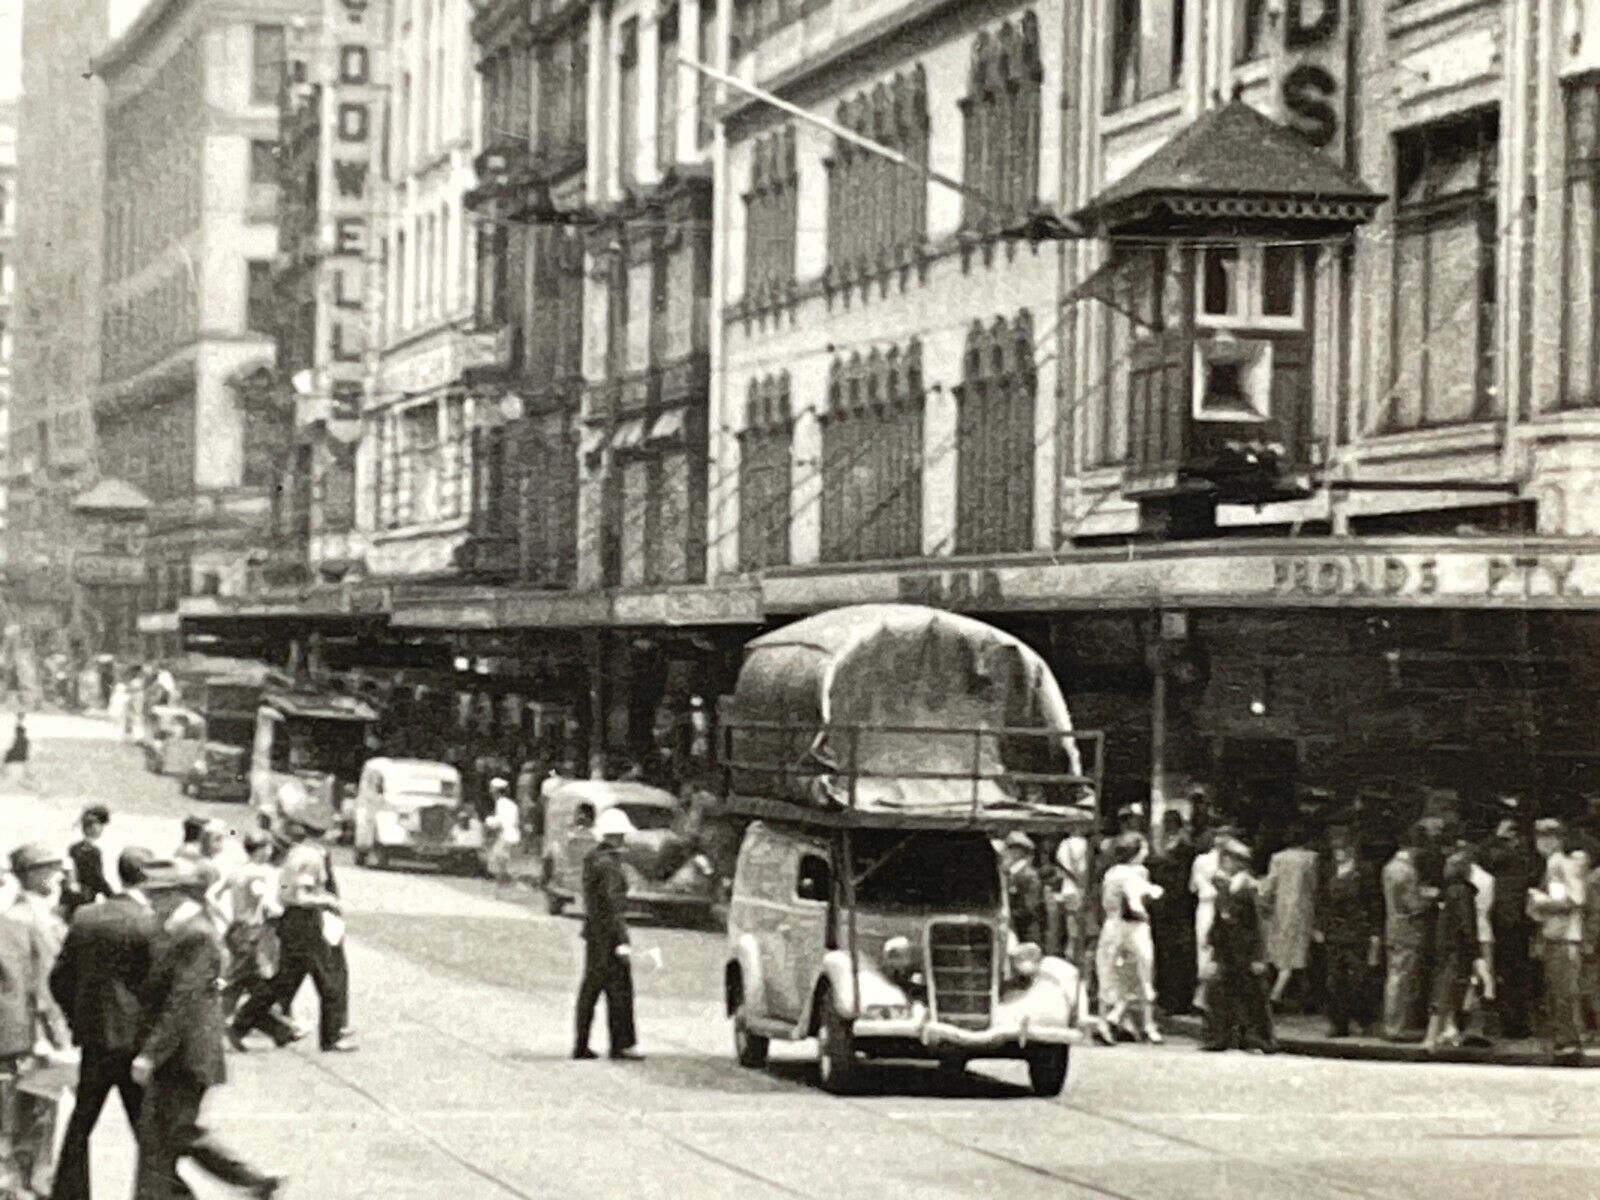 W3 Photograph 1944 Street Scene POV Sydney Australia Car With Gas Bag On Top